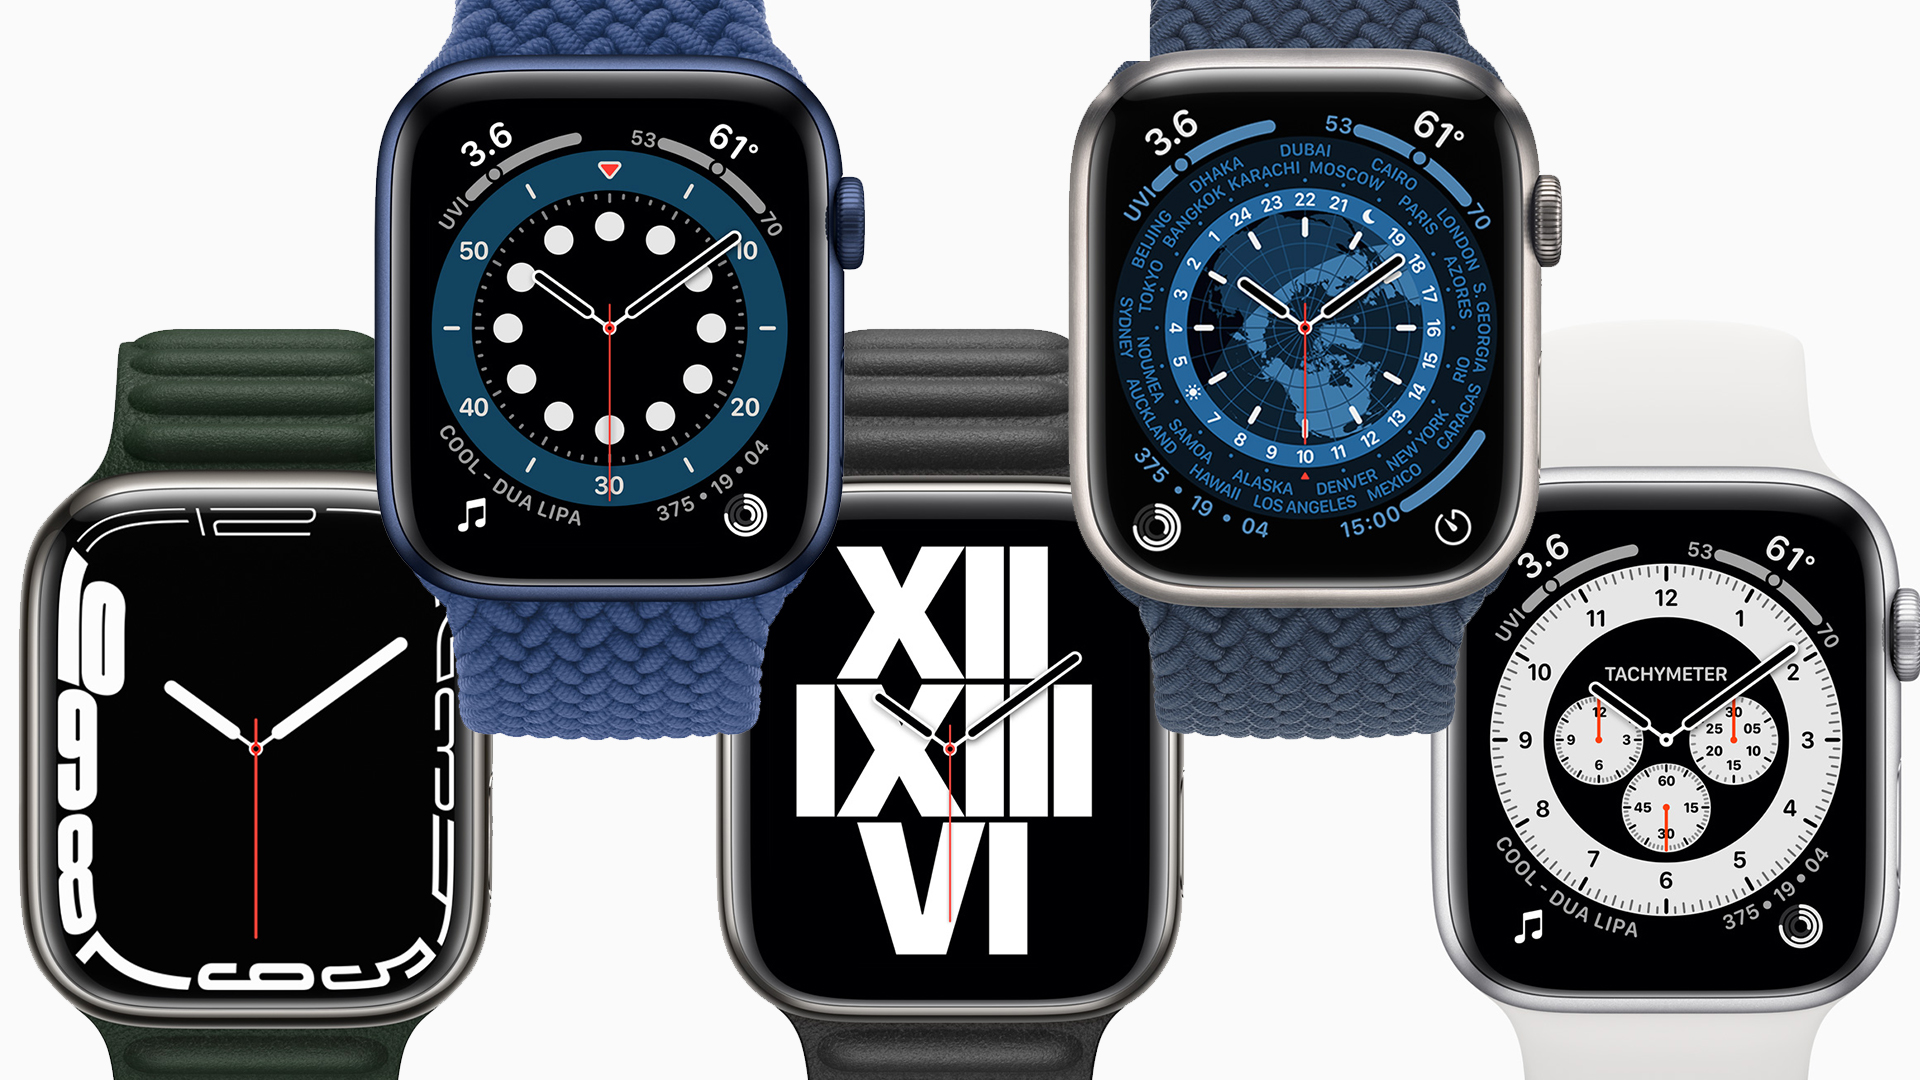 The Apple Watch Series 